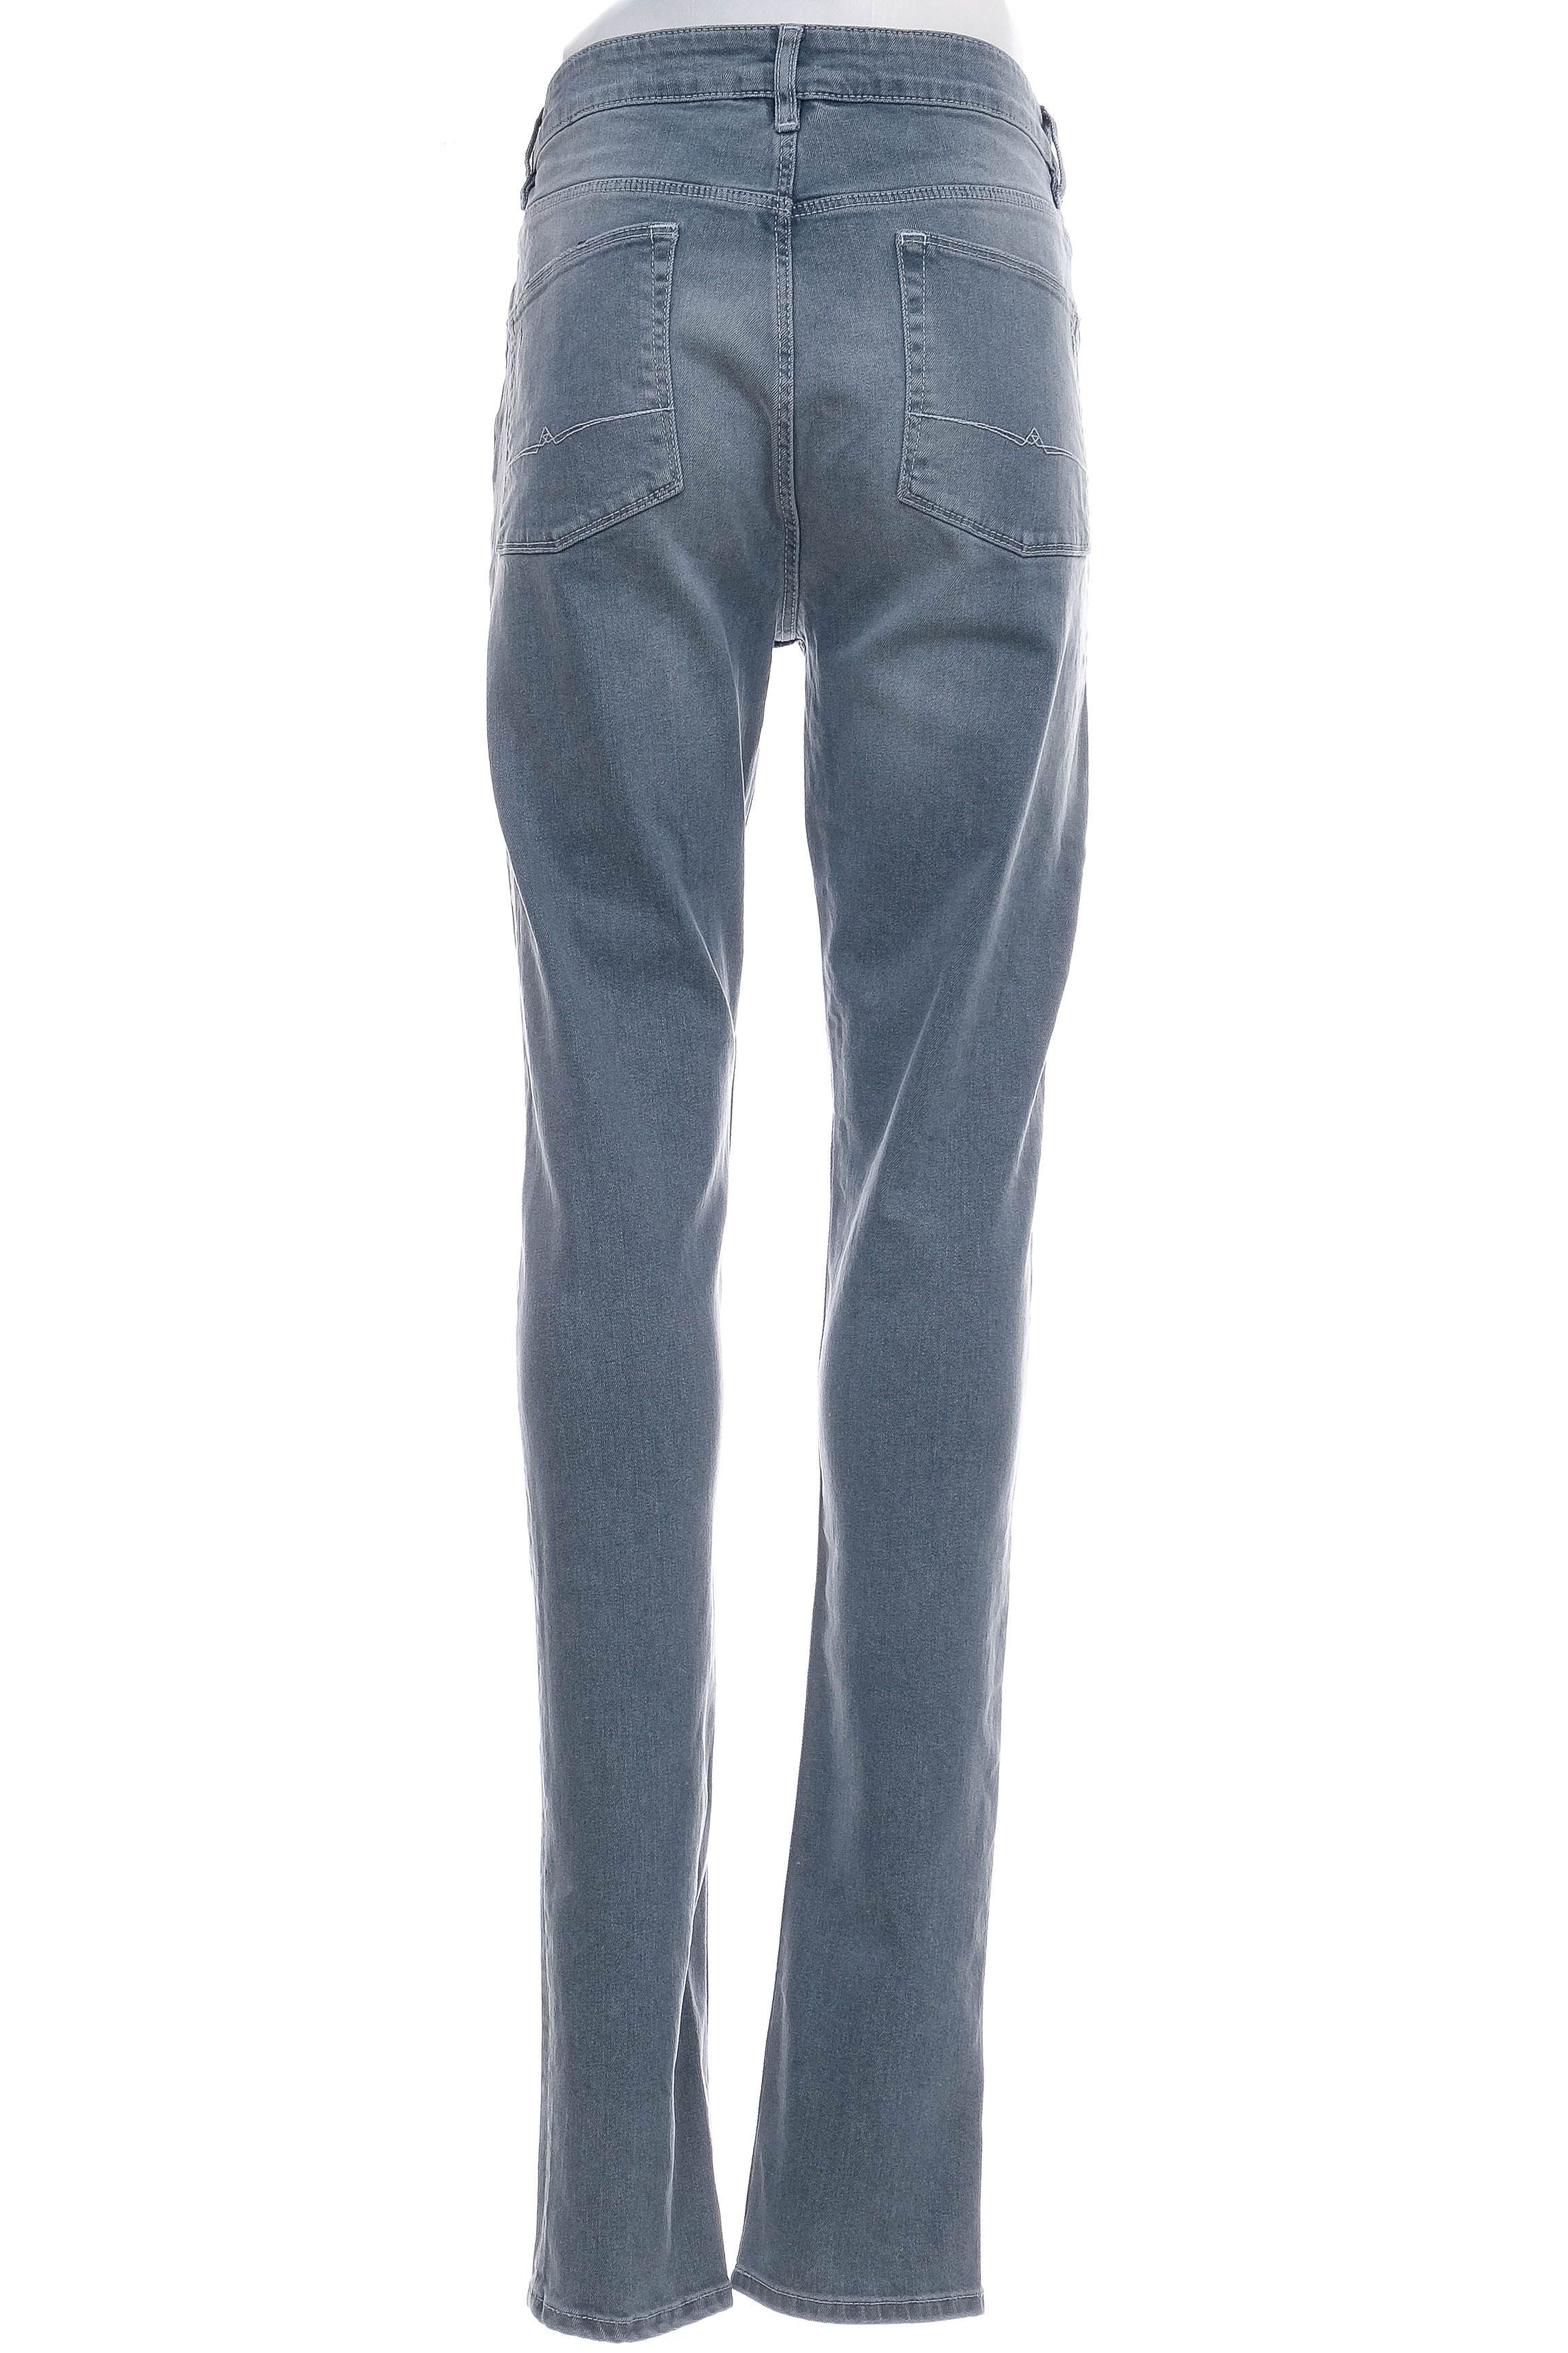 Men's jeans - Asos - 1